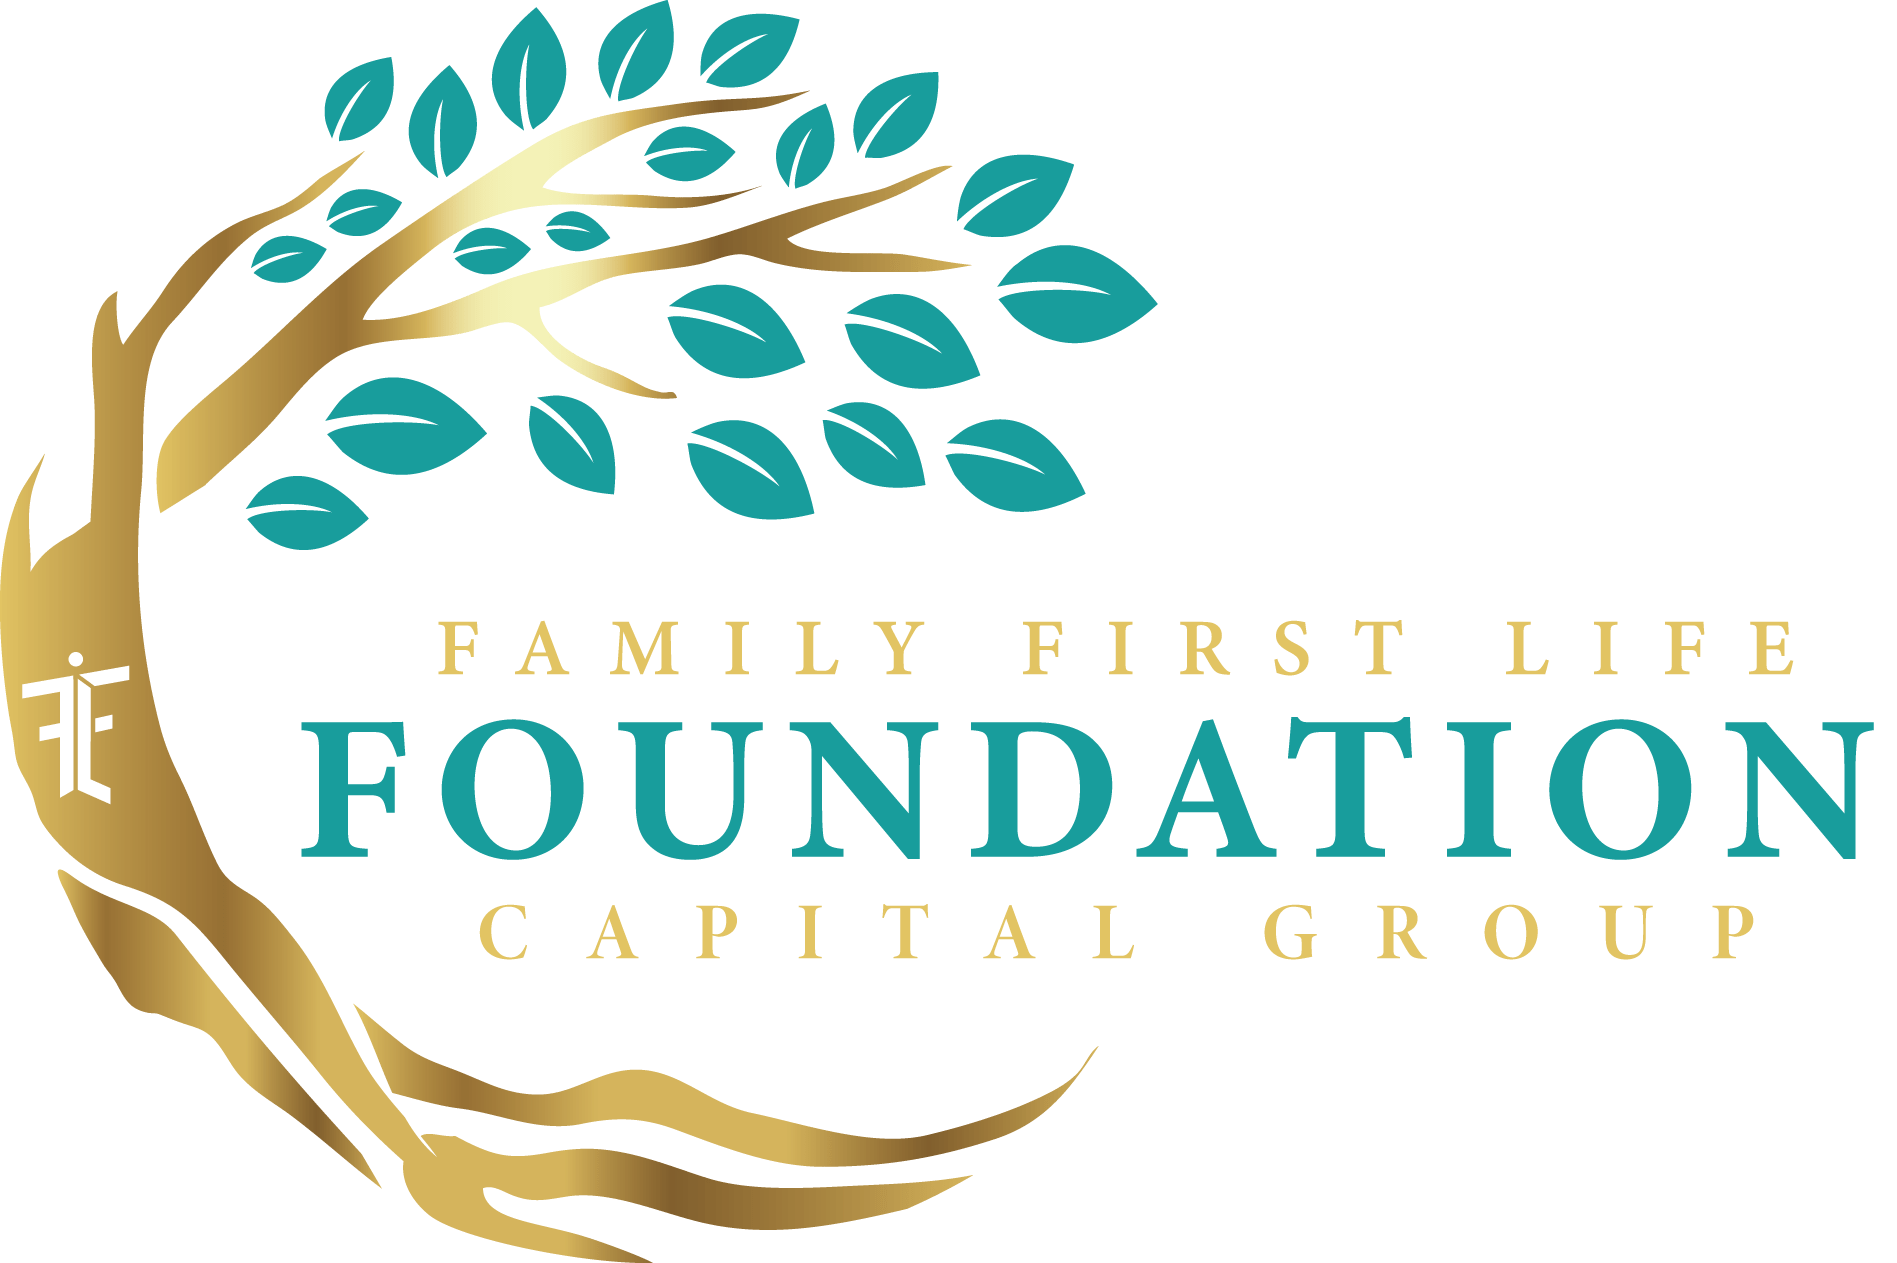 Foundation Capital Group